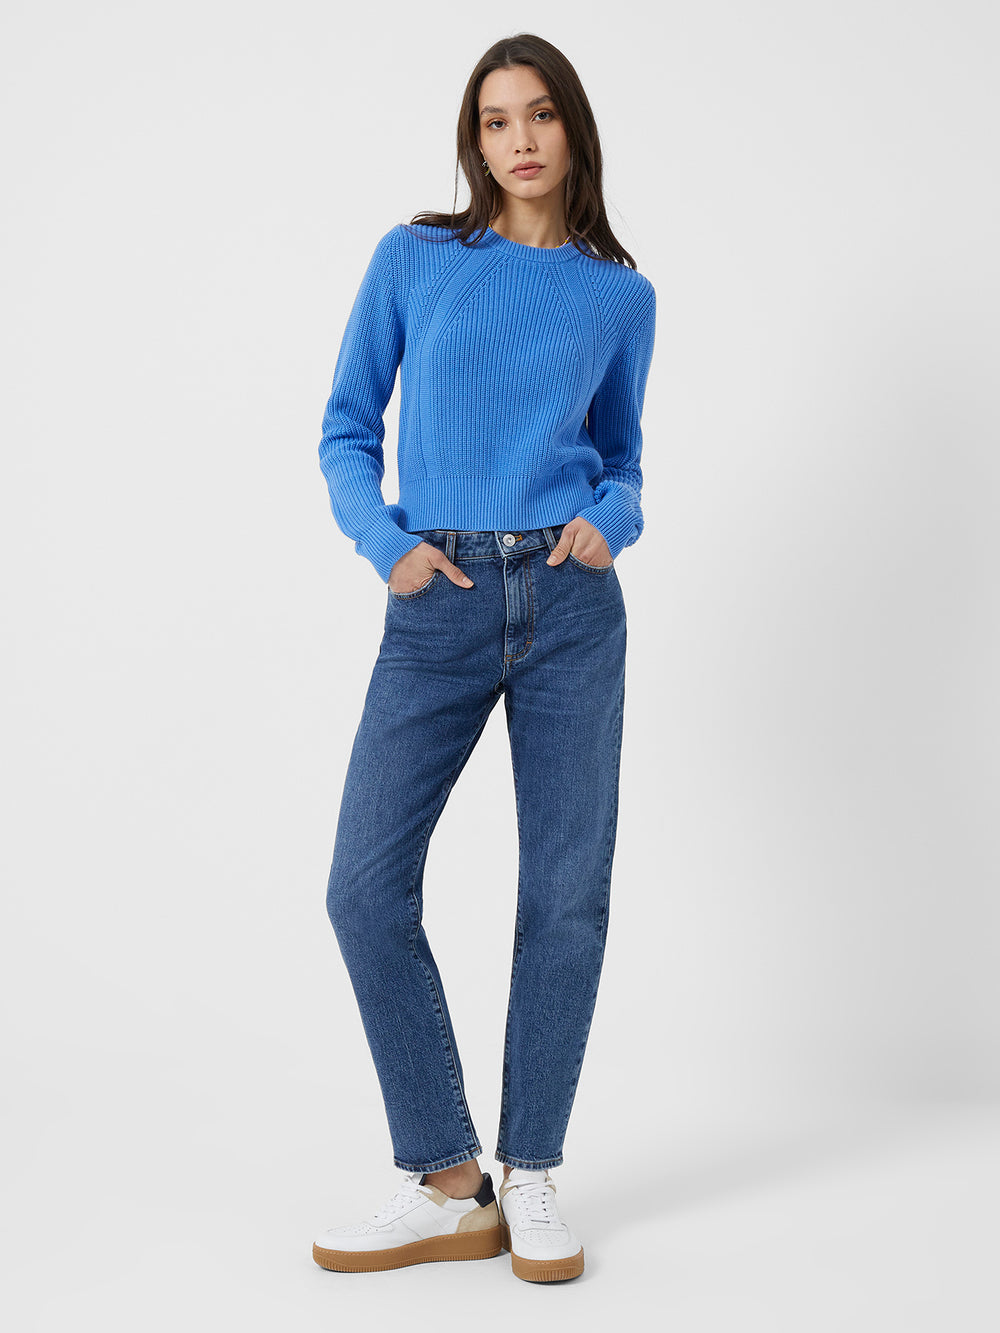 Jessie Mozart Sweater Nebulas Blue | French Connection US